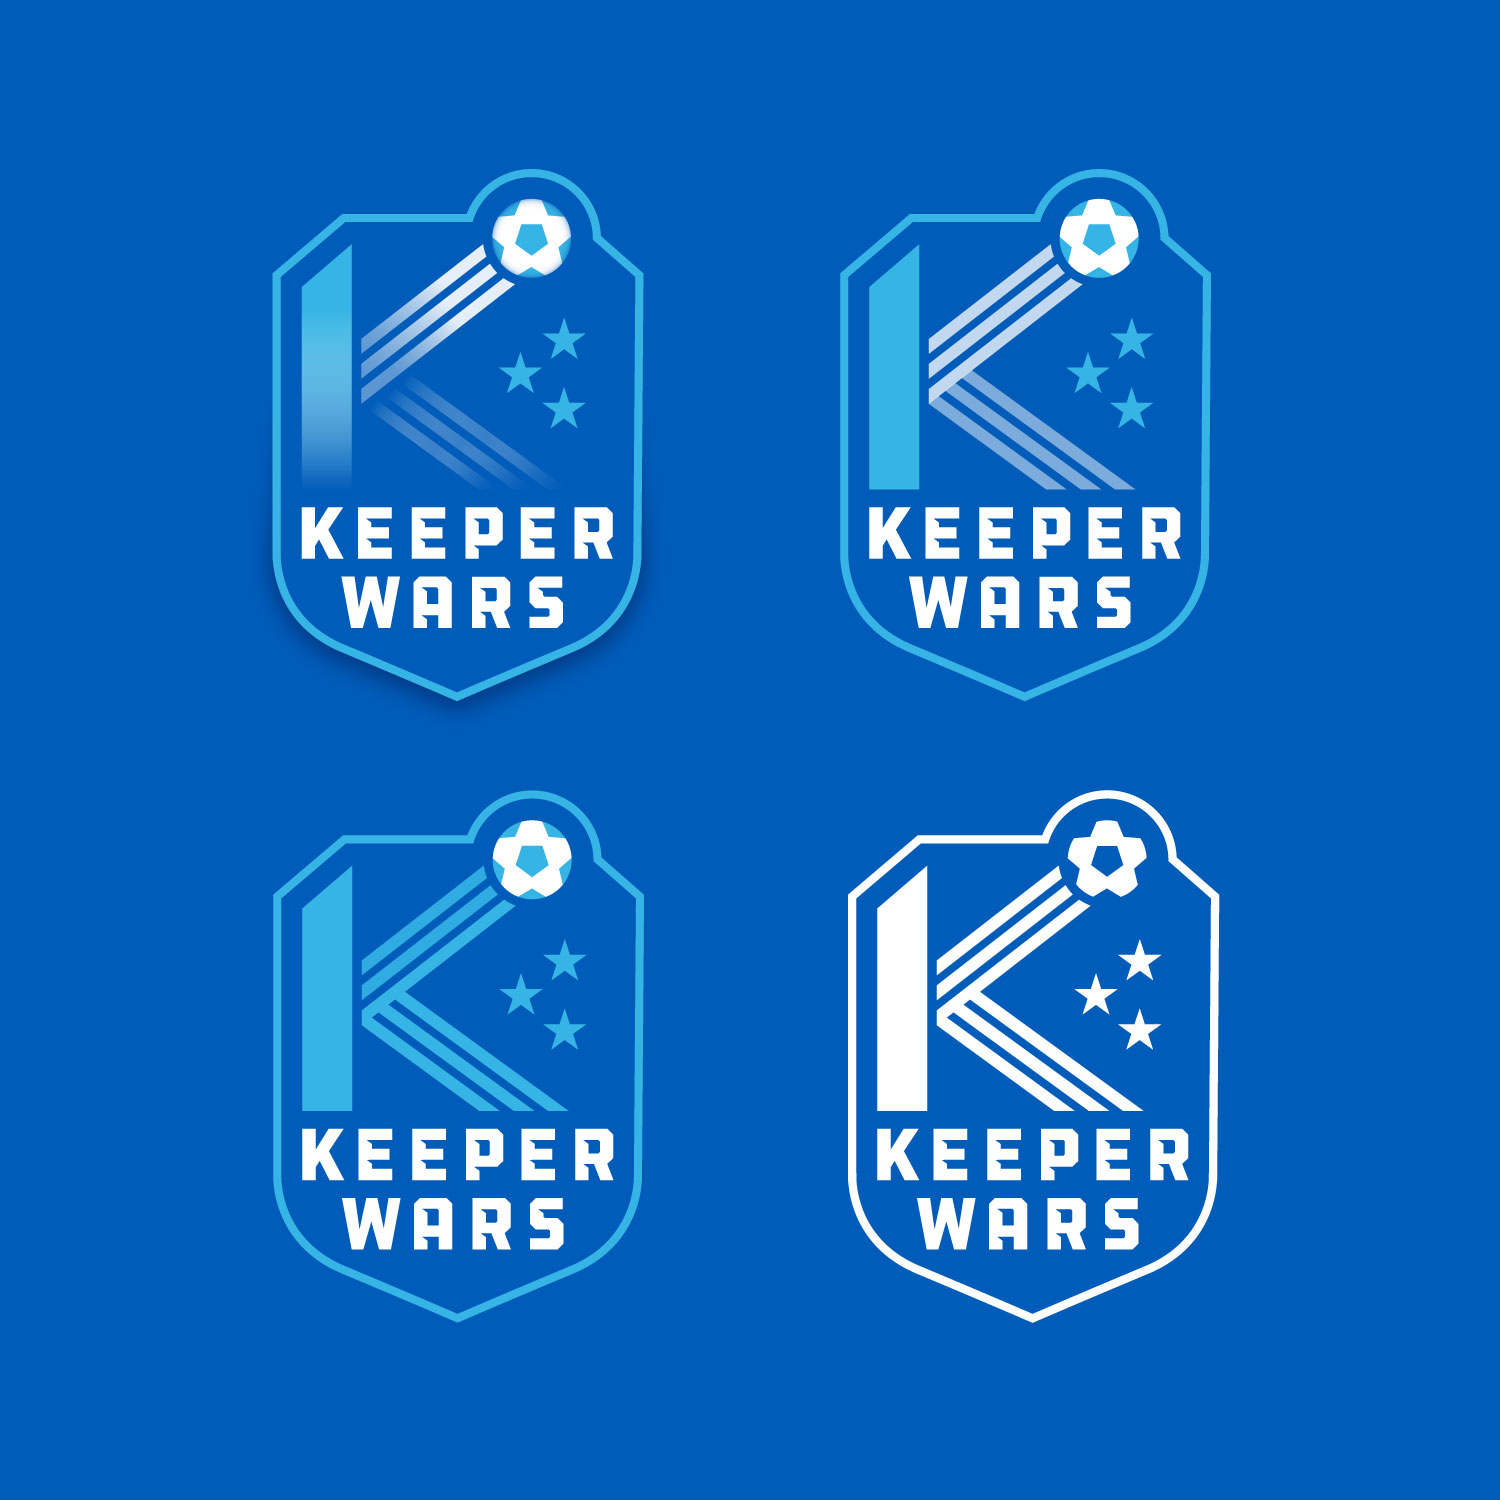 Keeper Wars Charity Soccer Contest for Arkansas Children's hospital logo or crest design Little Rock Arkansas—by Hunter Oden of oden.house